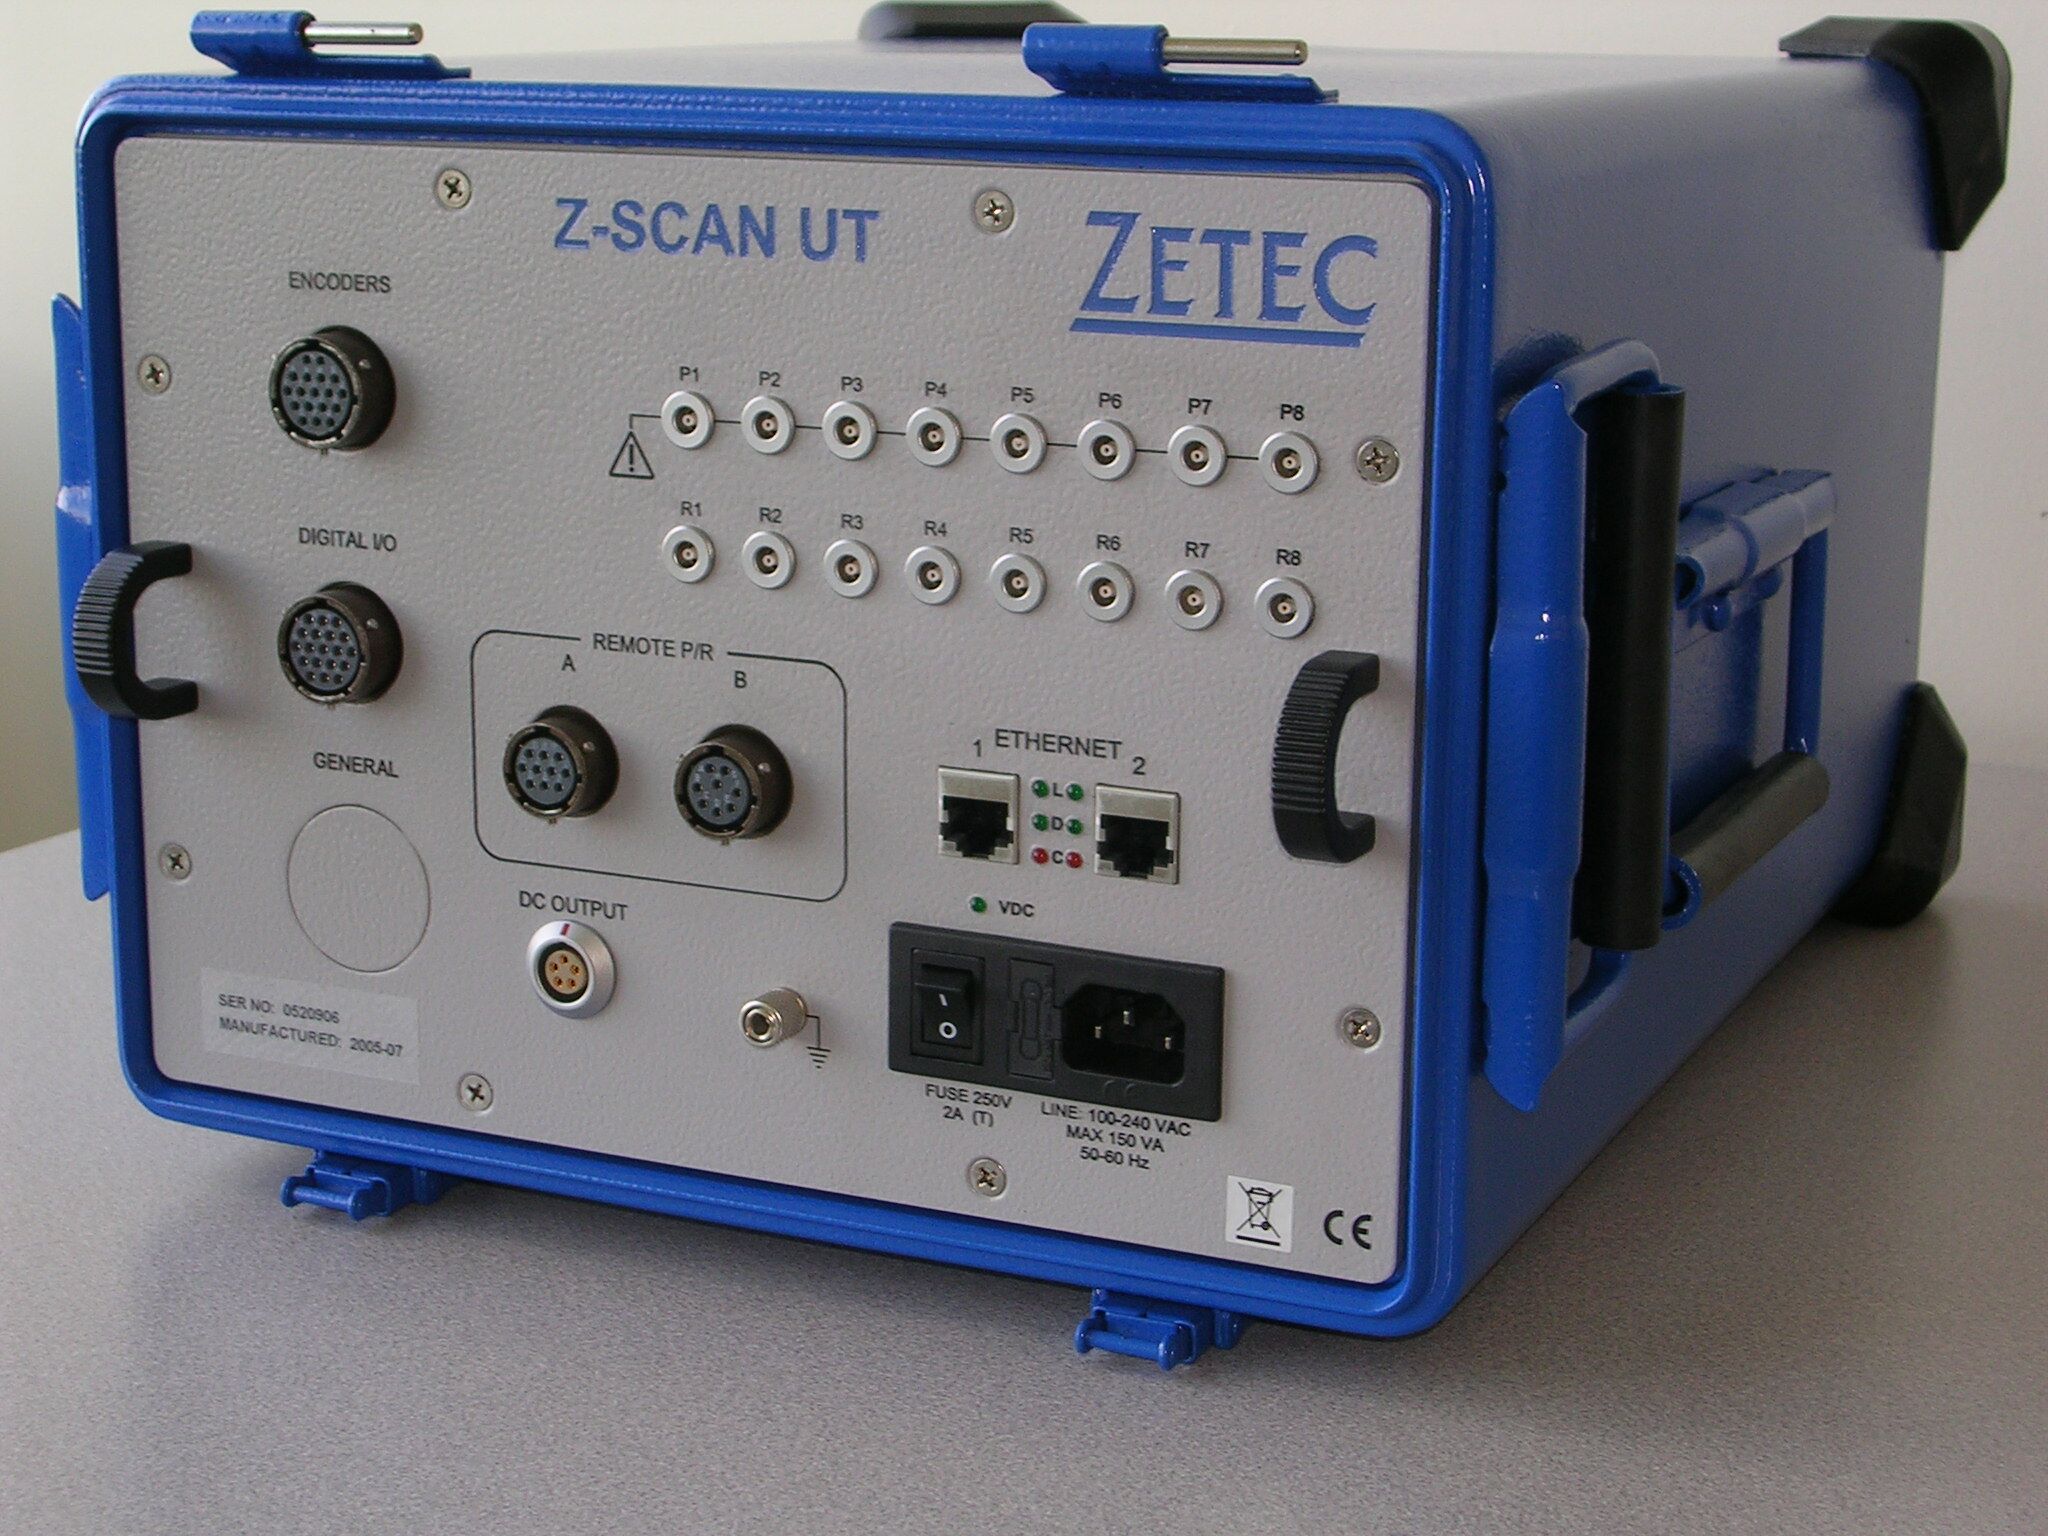 Zetec Z-Scan UT Conventional UT Data Acquisition System